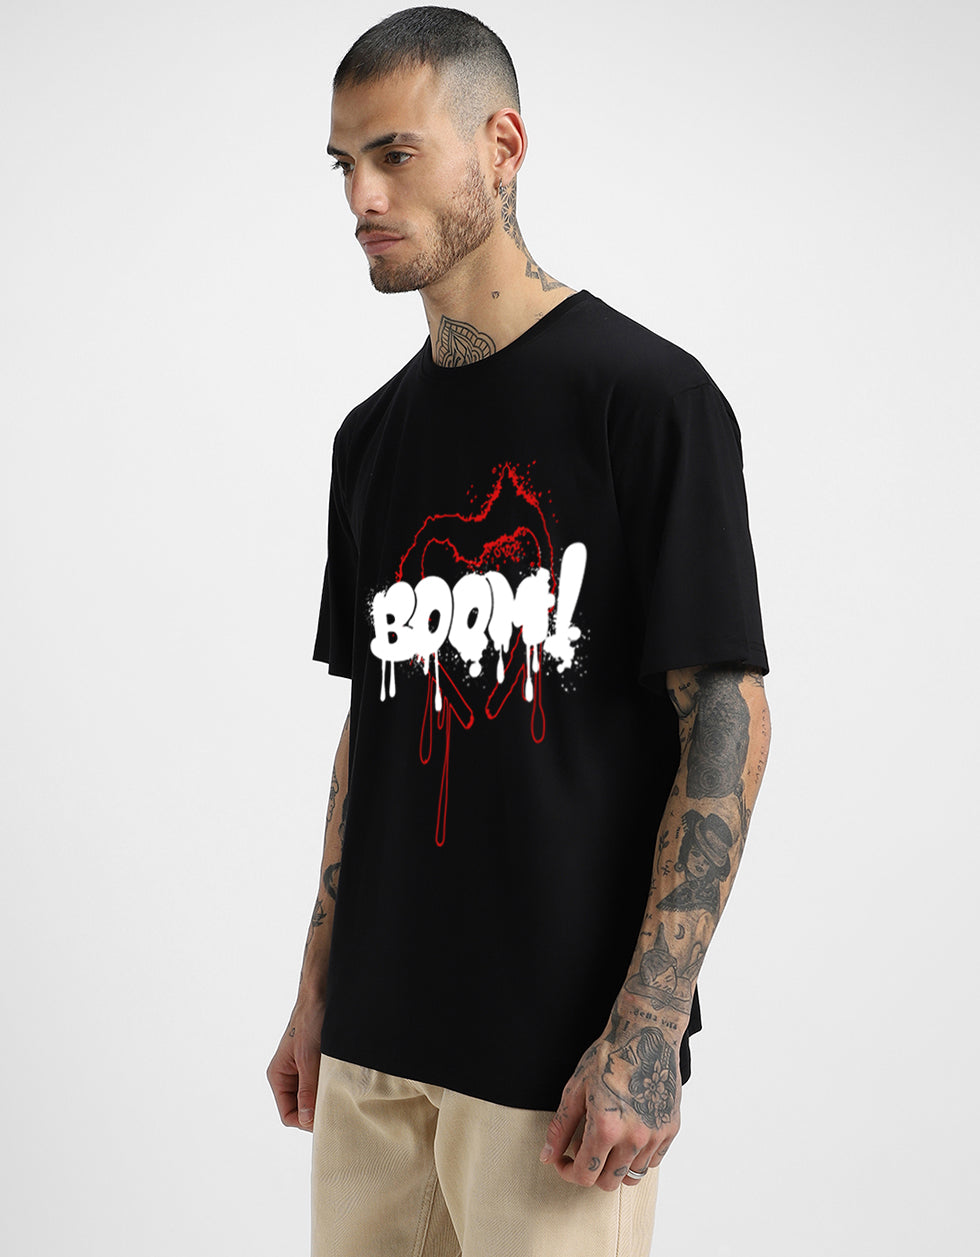 Boom Black Front Typographic Printed Tshirt